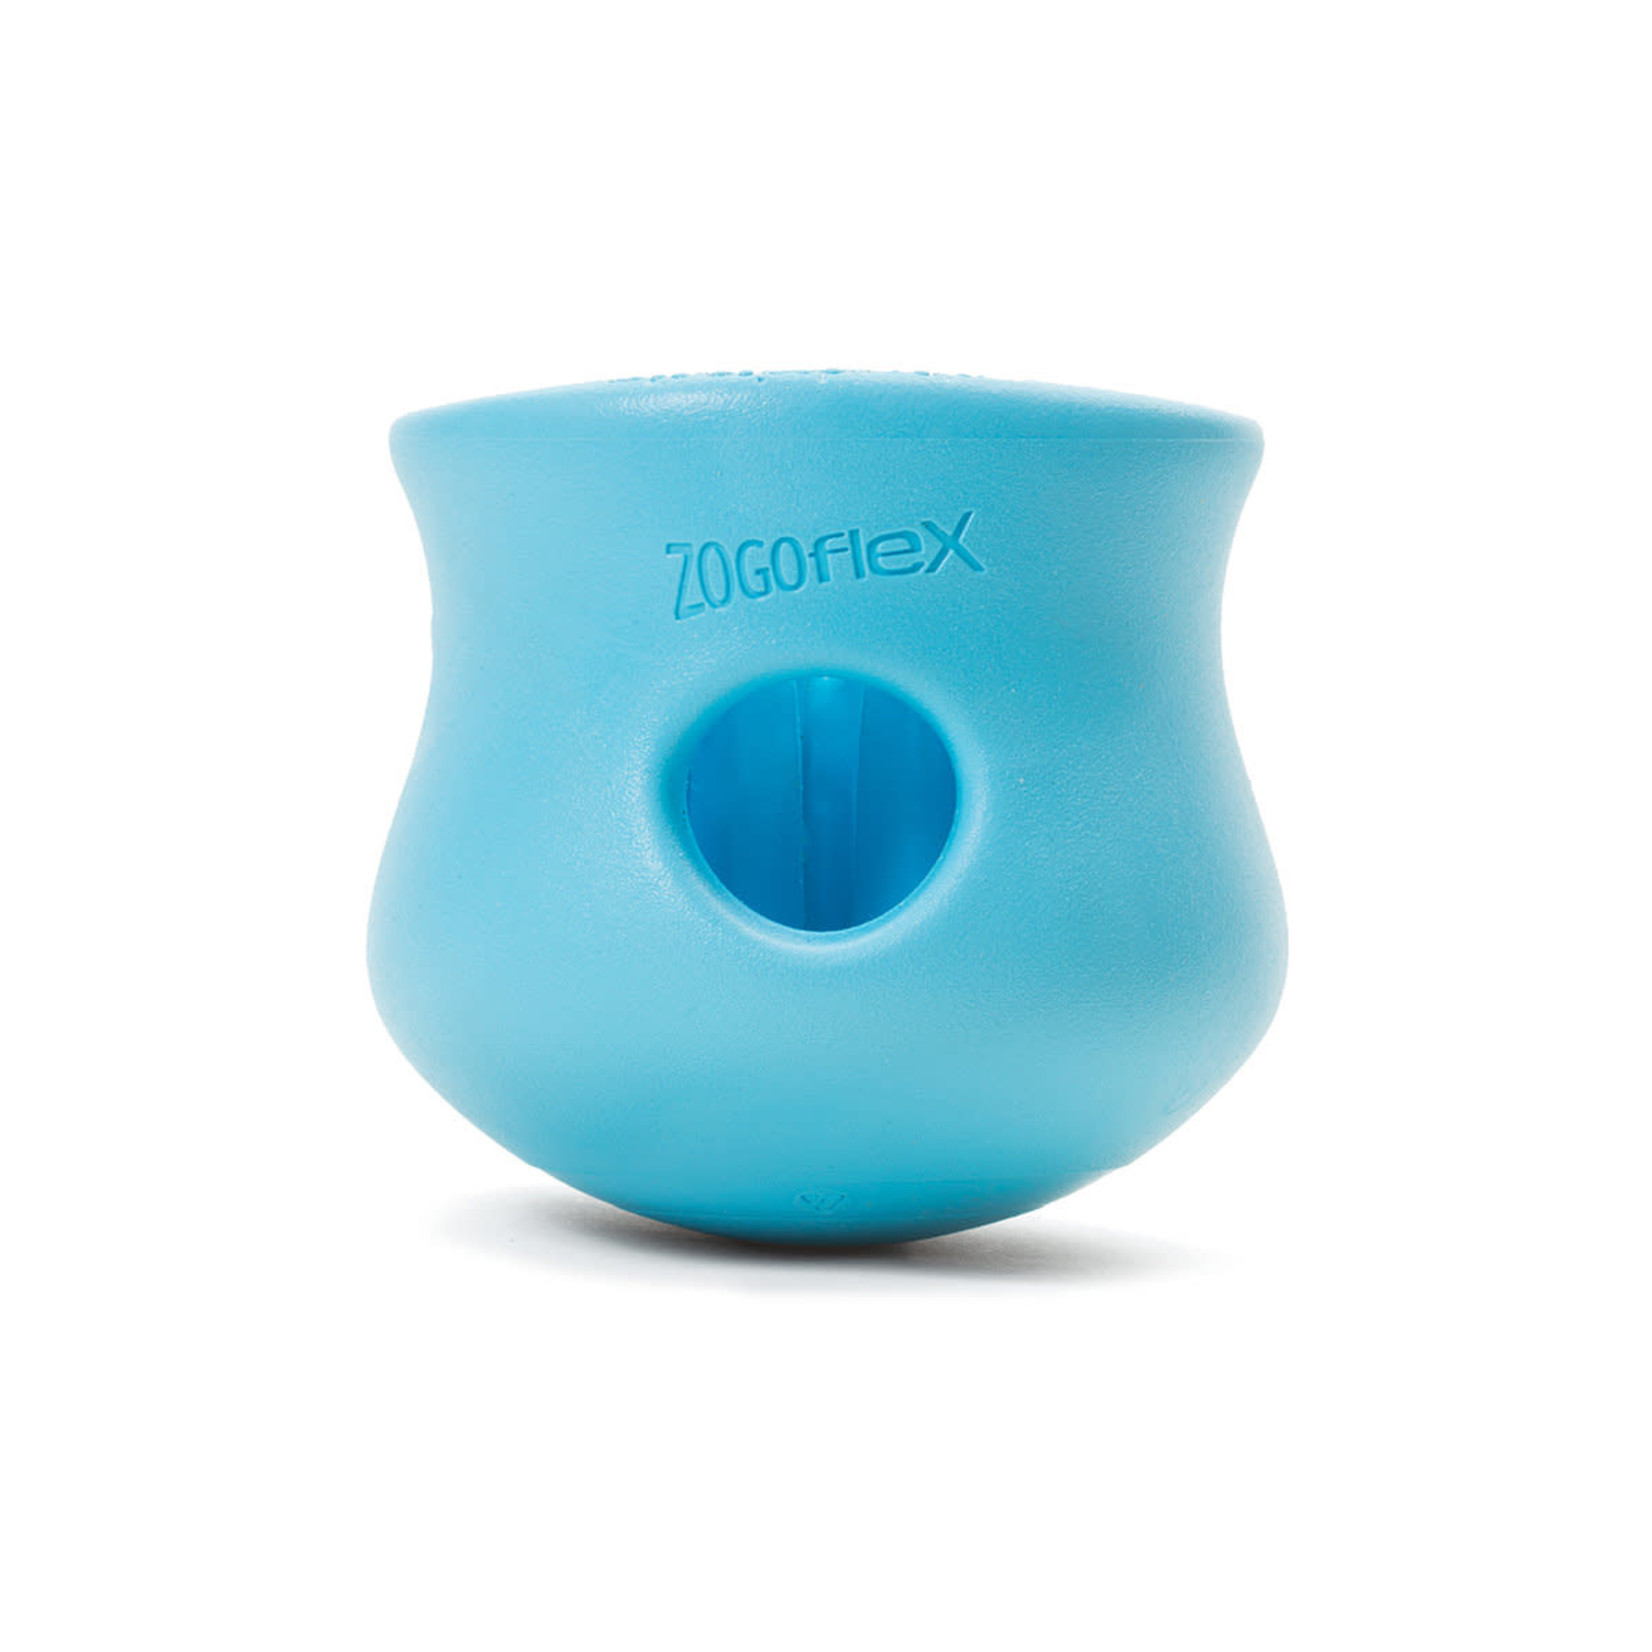 Toppl Small 3" - Aqua Blue dog toy/treat dispenser